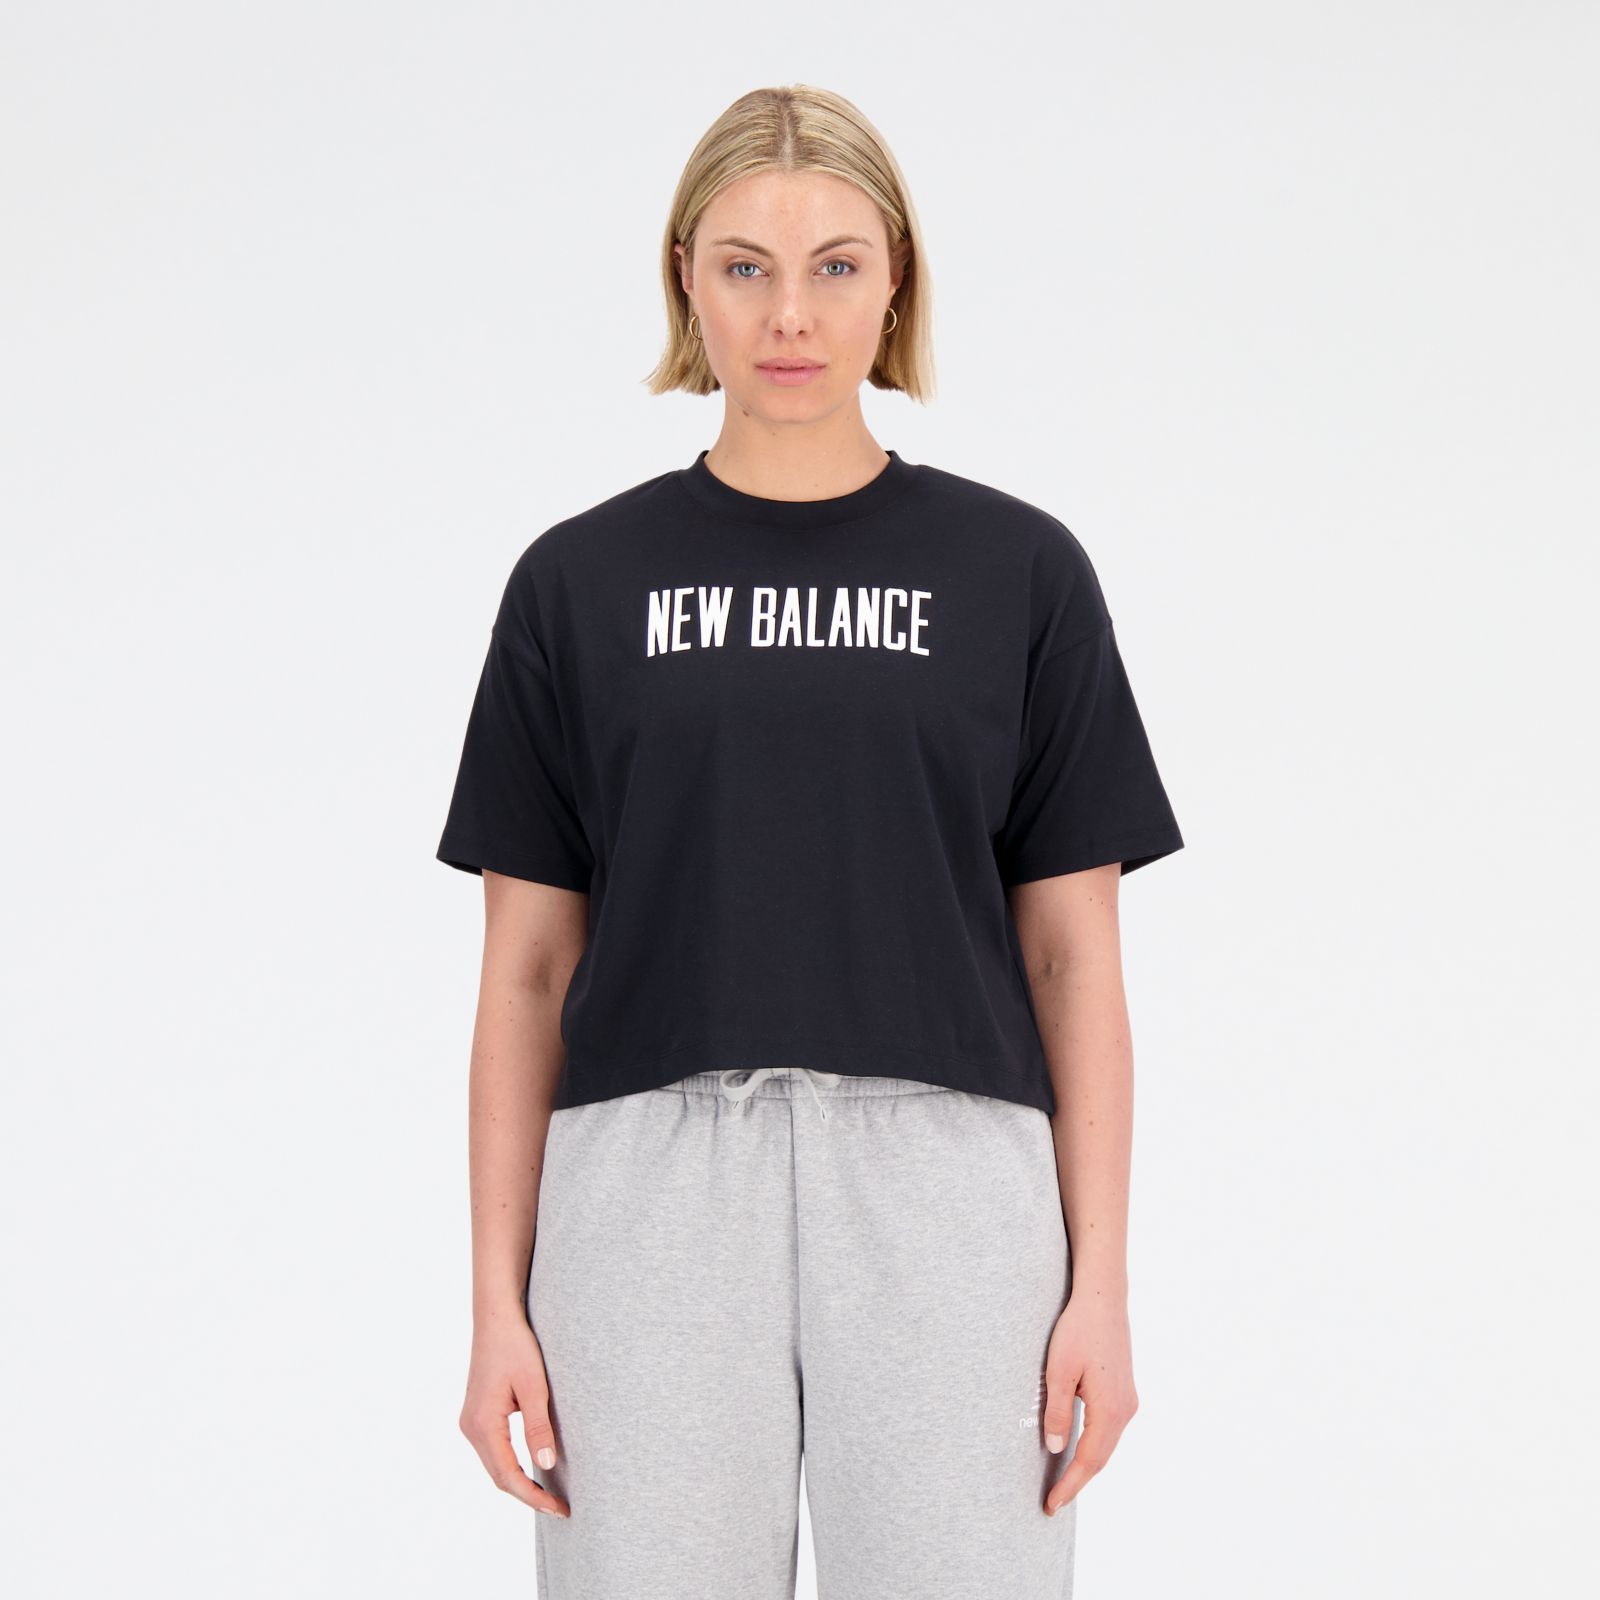 Women - Black New Balance Womens Clothing - JD Sports Global